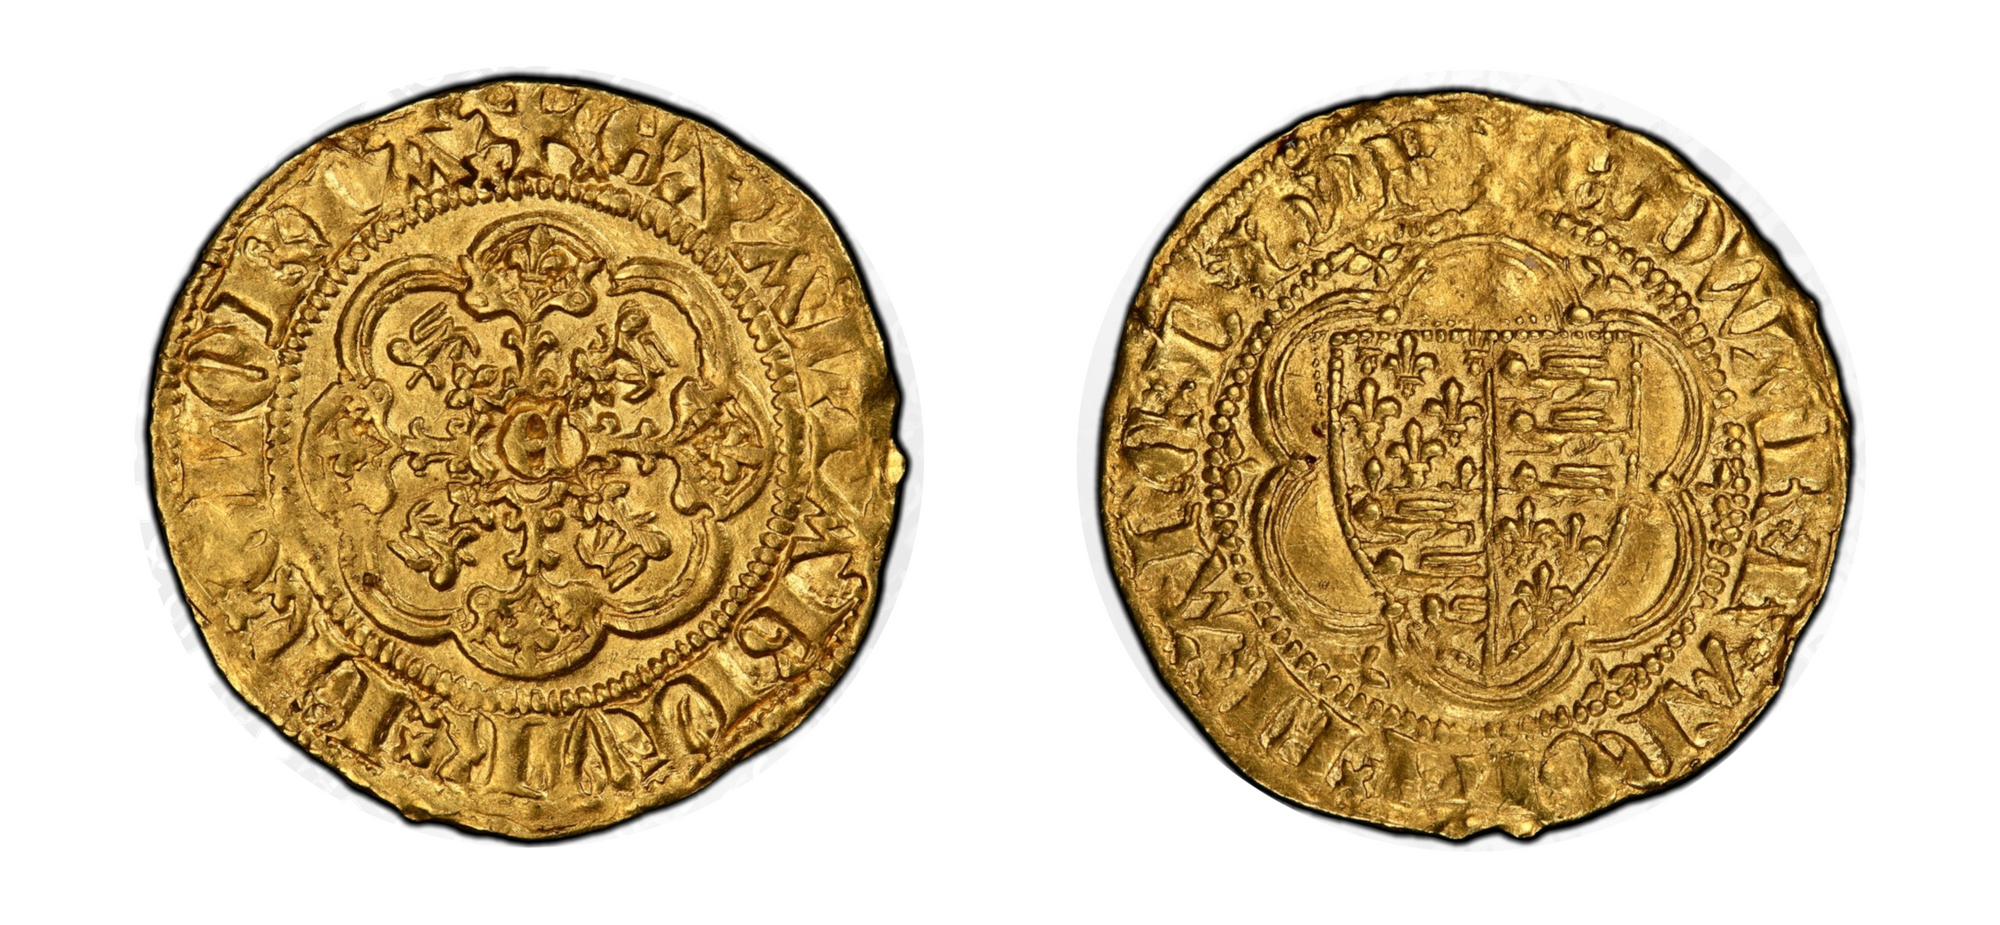 1346-1351 Gold Quarter Noble Edward III PCGS MS62 - Hard Asset Management, Inc